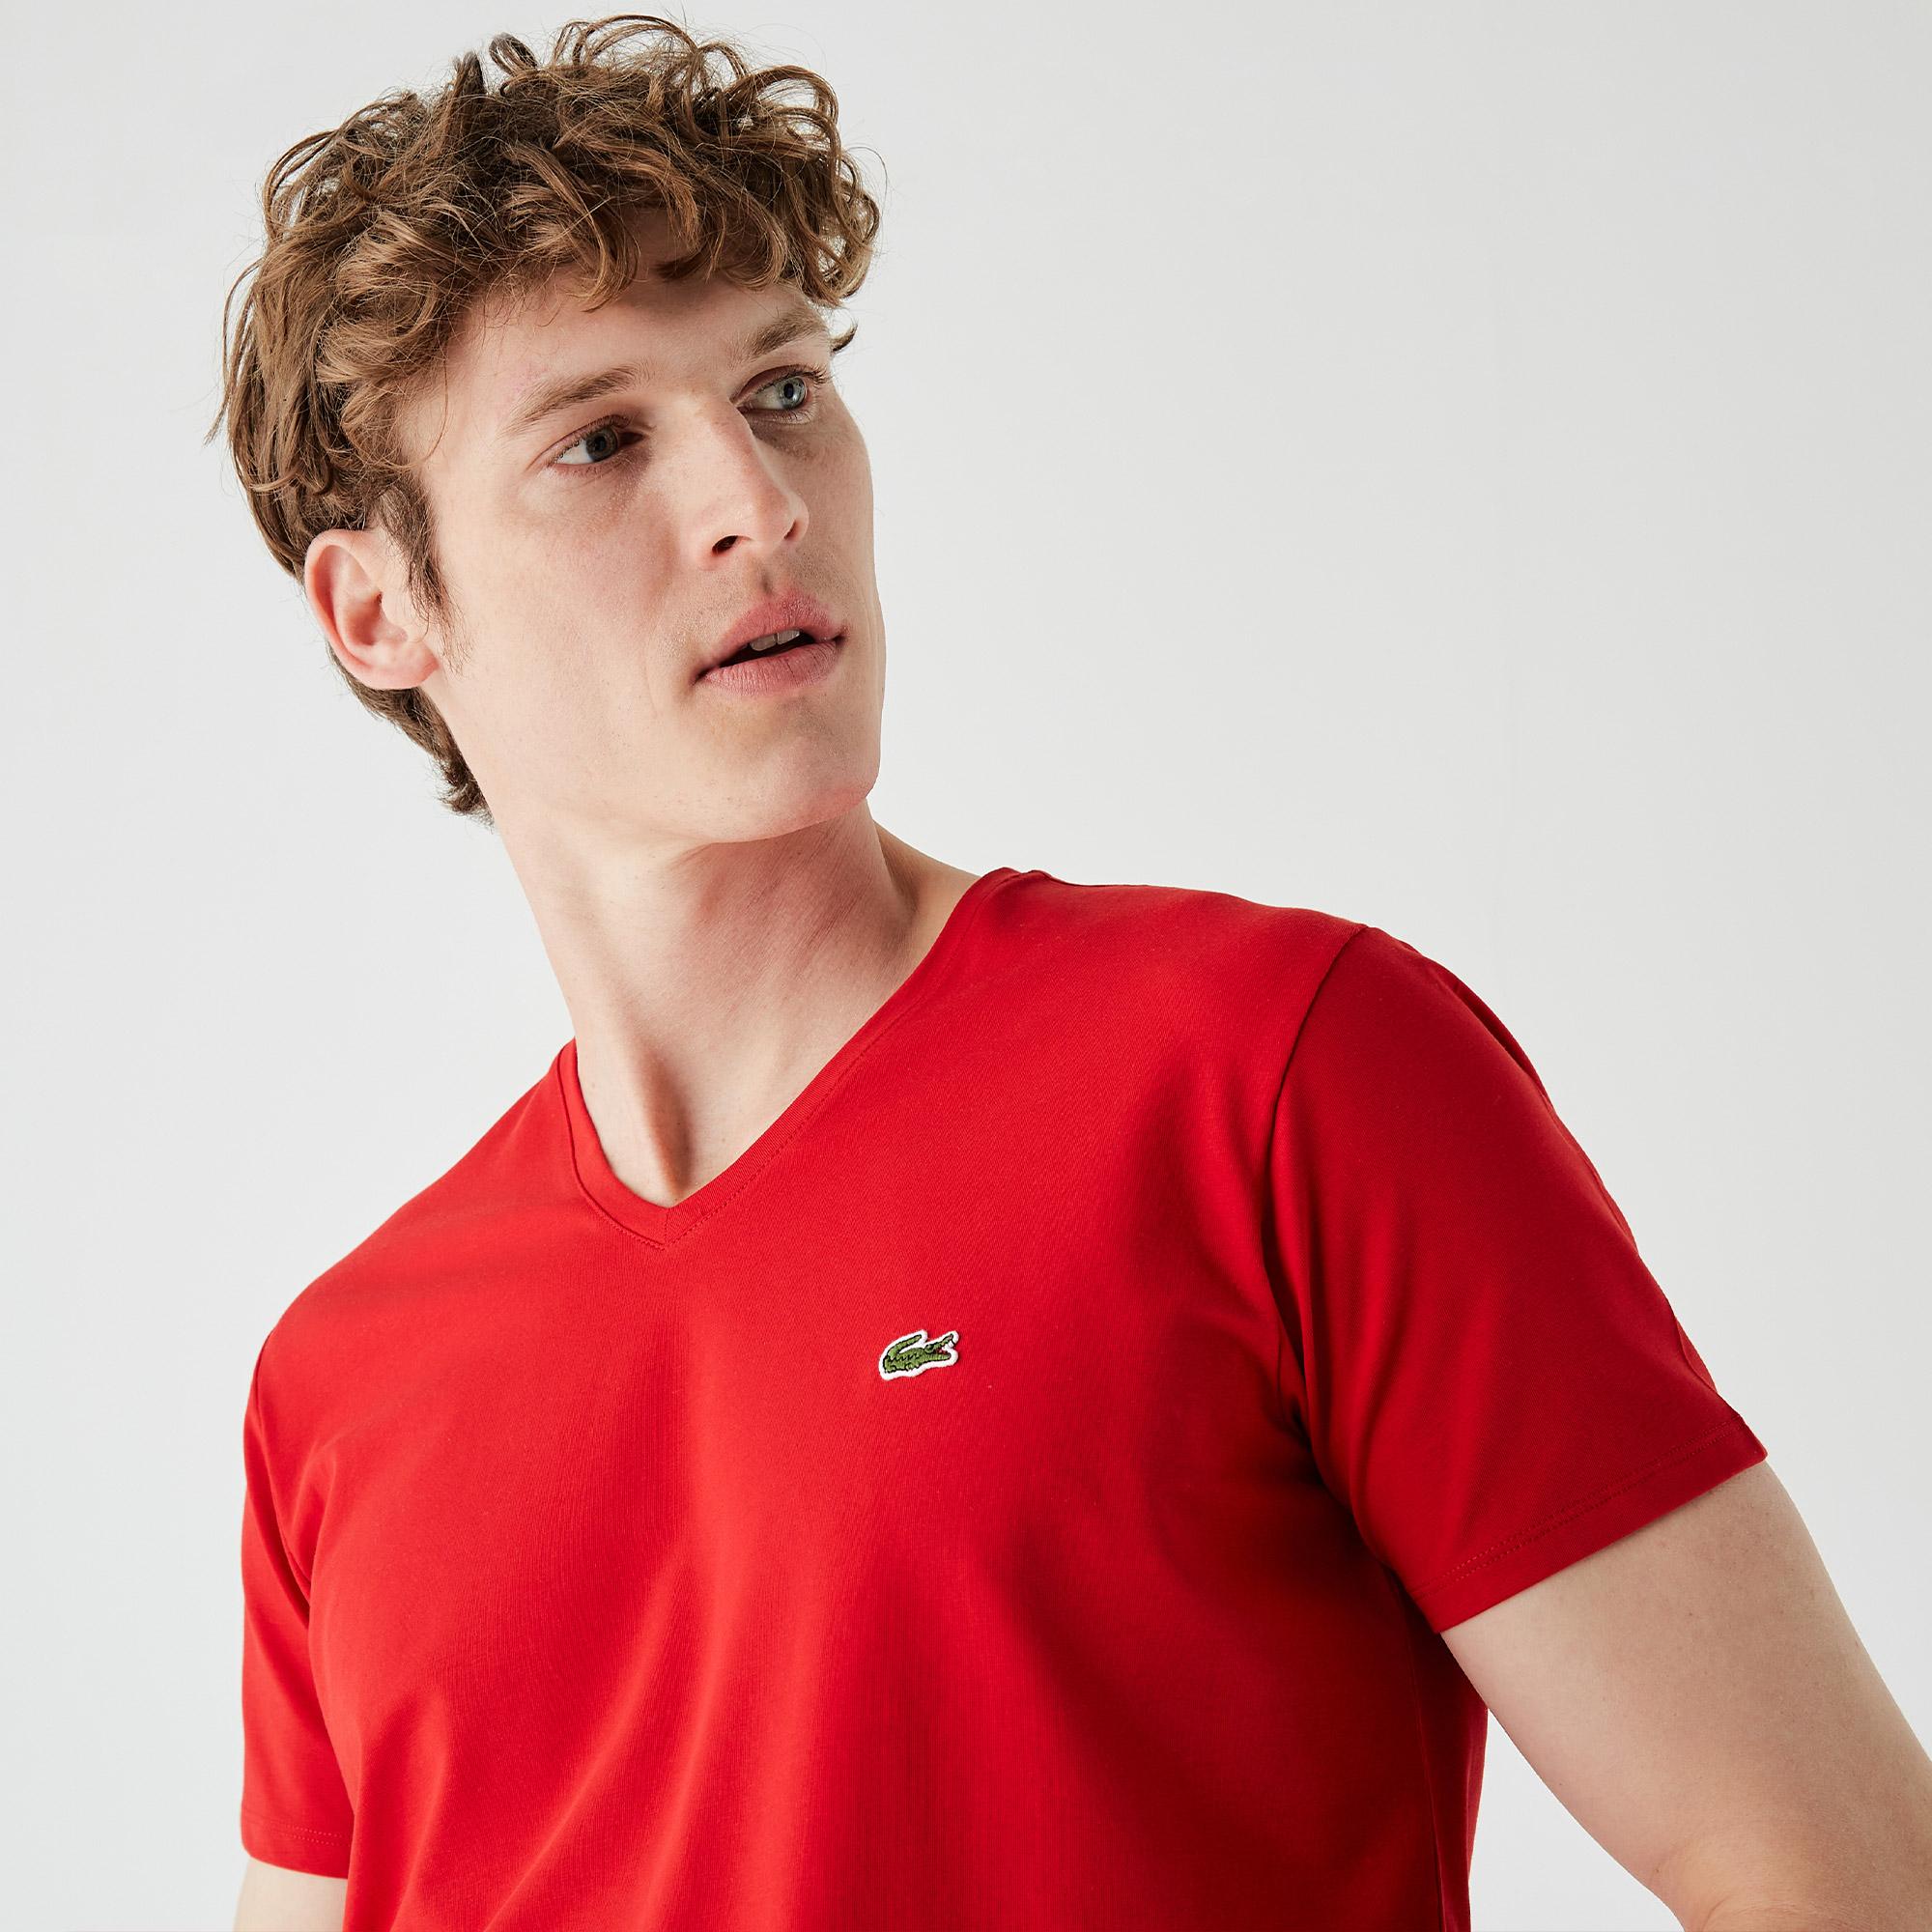 Lacoste Erkek Slim Fit V Yaka Kırmızı T-Shirt. 5